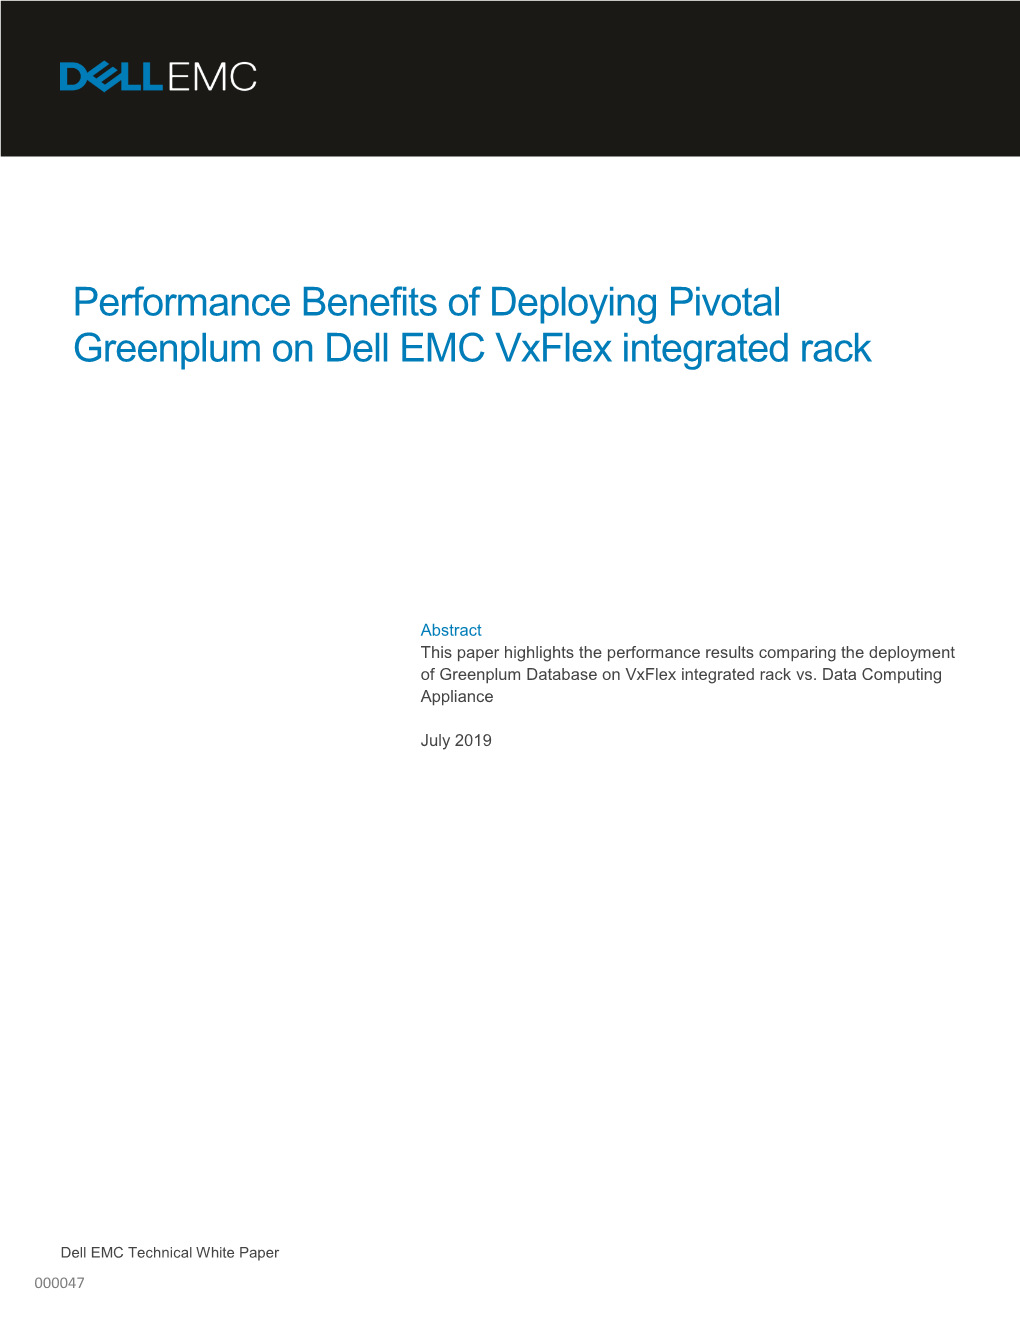 Performance Benefits of Deploying Pivotal Greenplum on Dell EMC Vxflex Integrated Rack